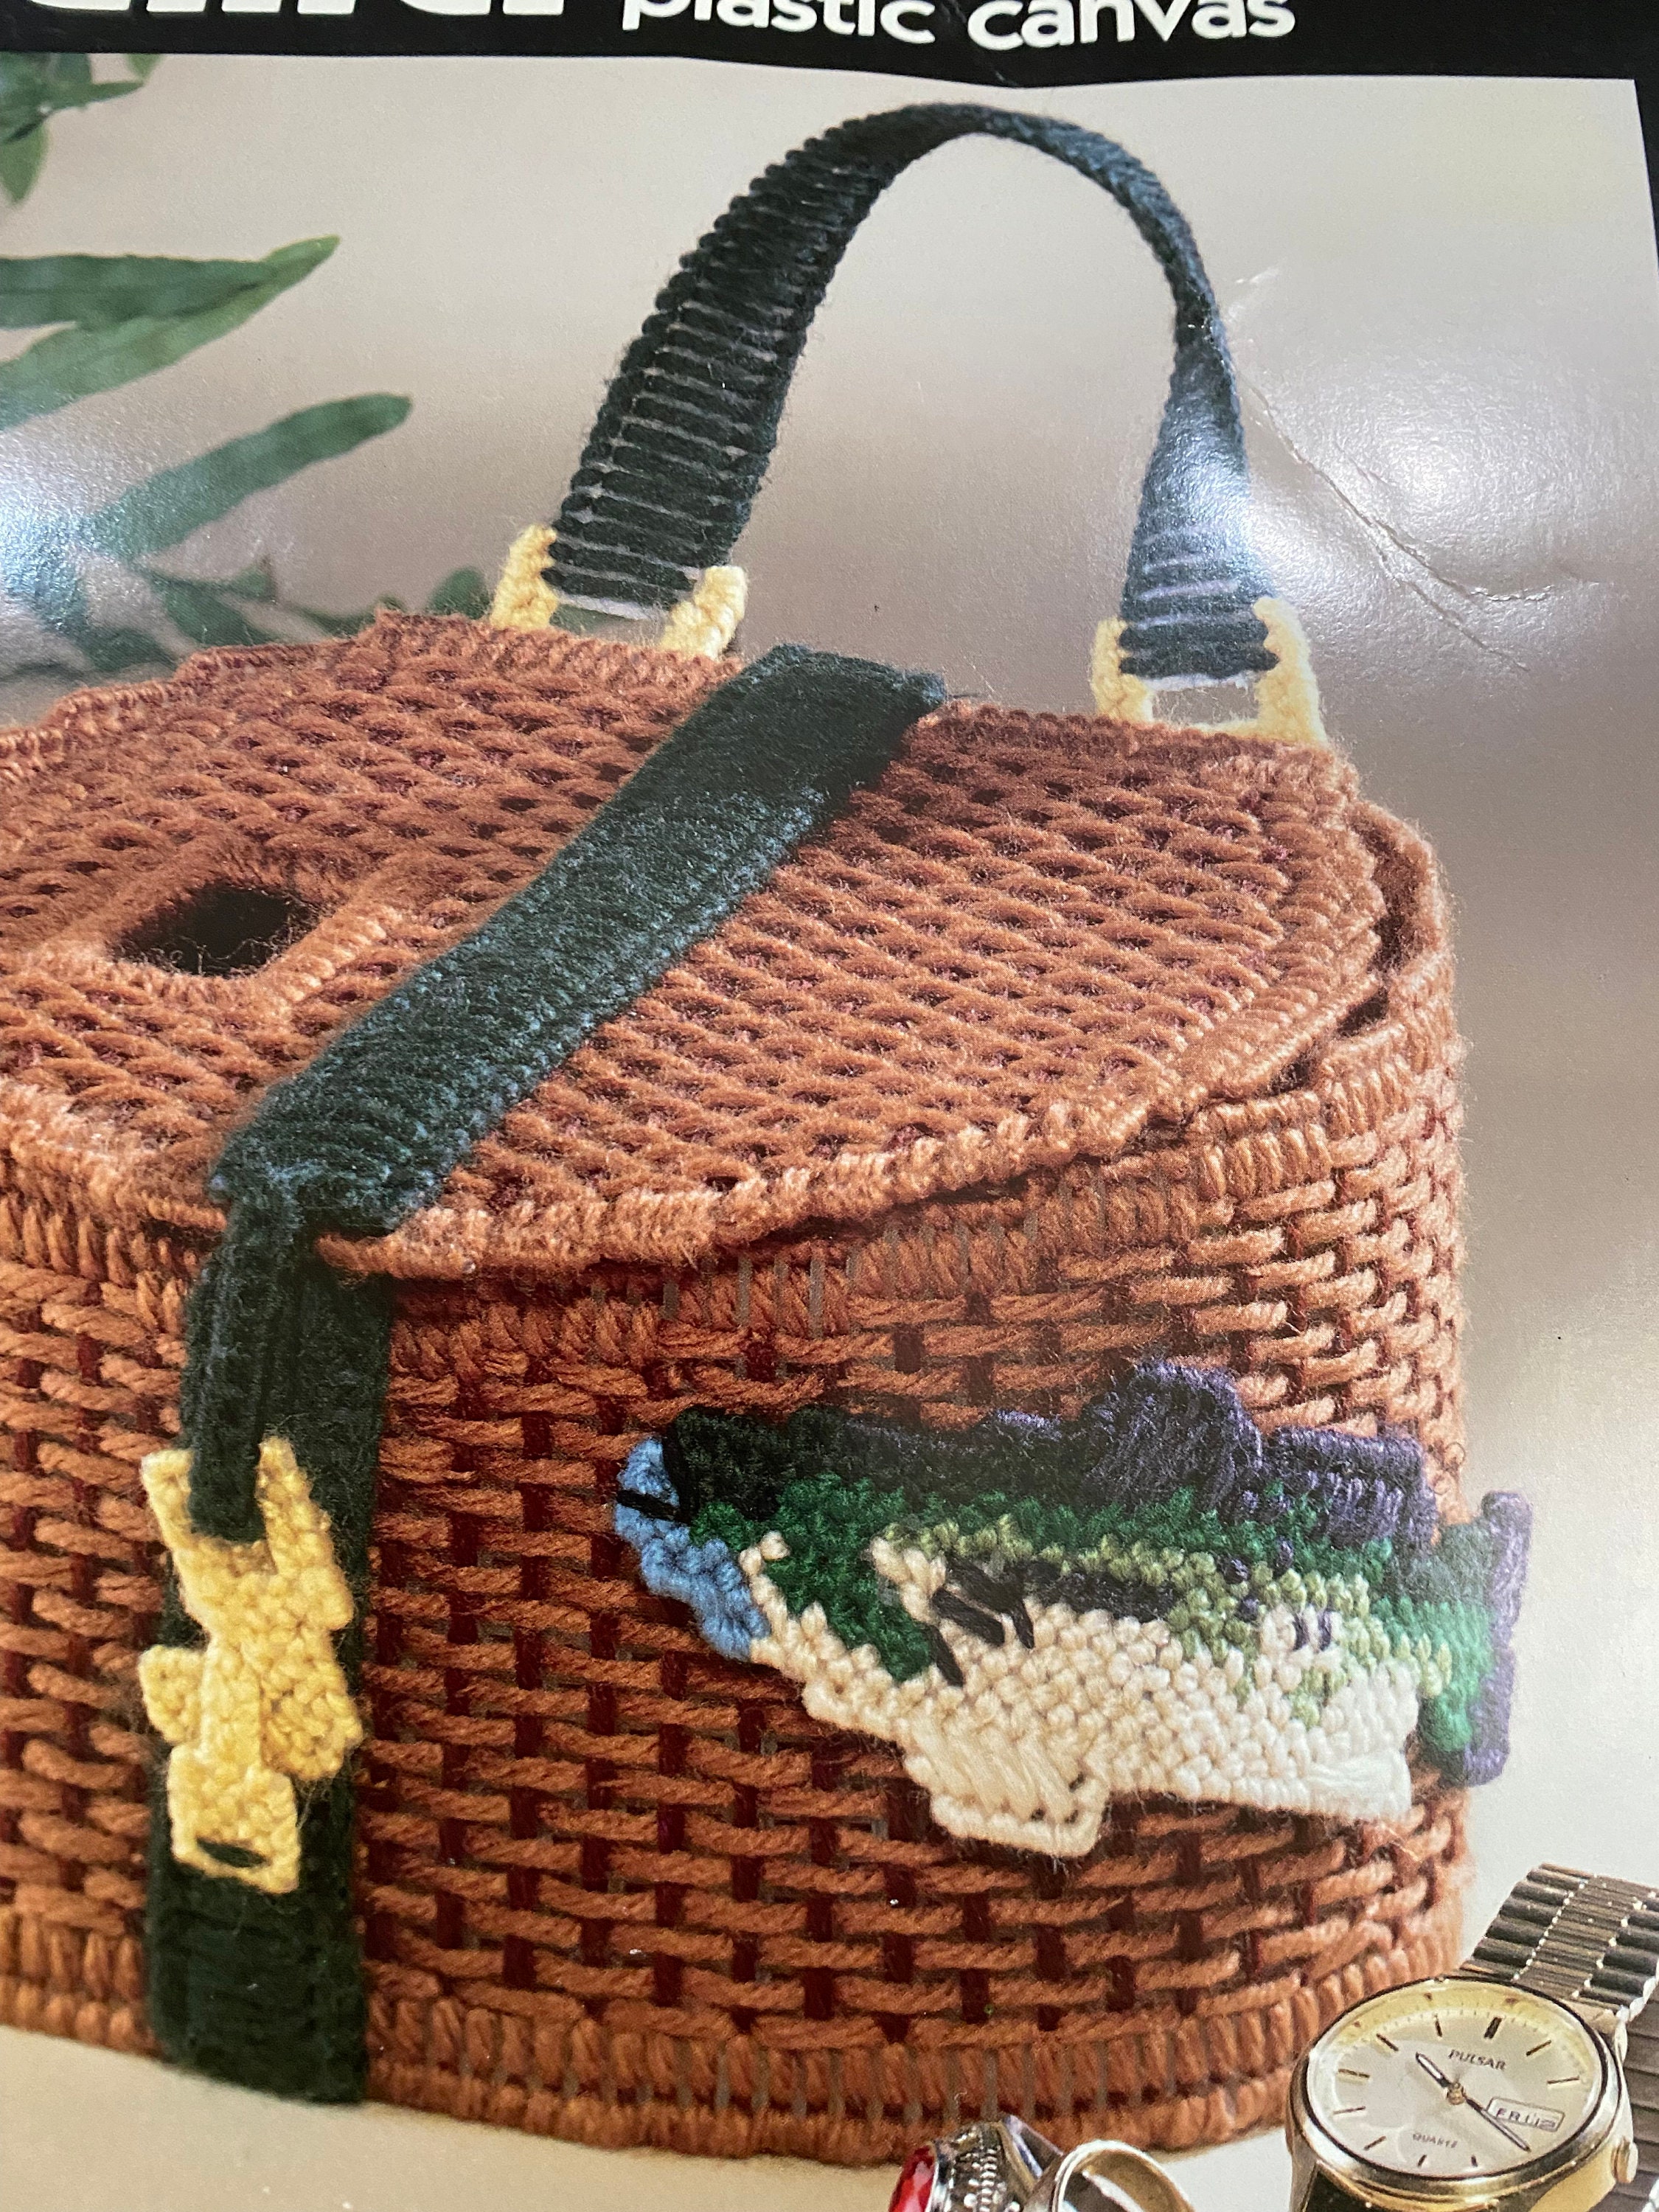 Kit Fishing Creel Caddy Box bucilla Plastic Canvas / Stitch Kit